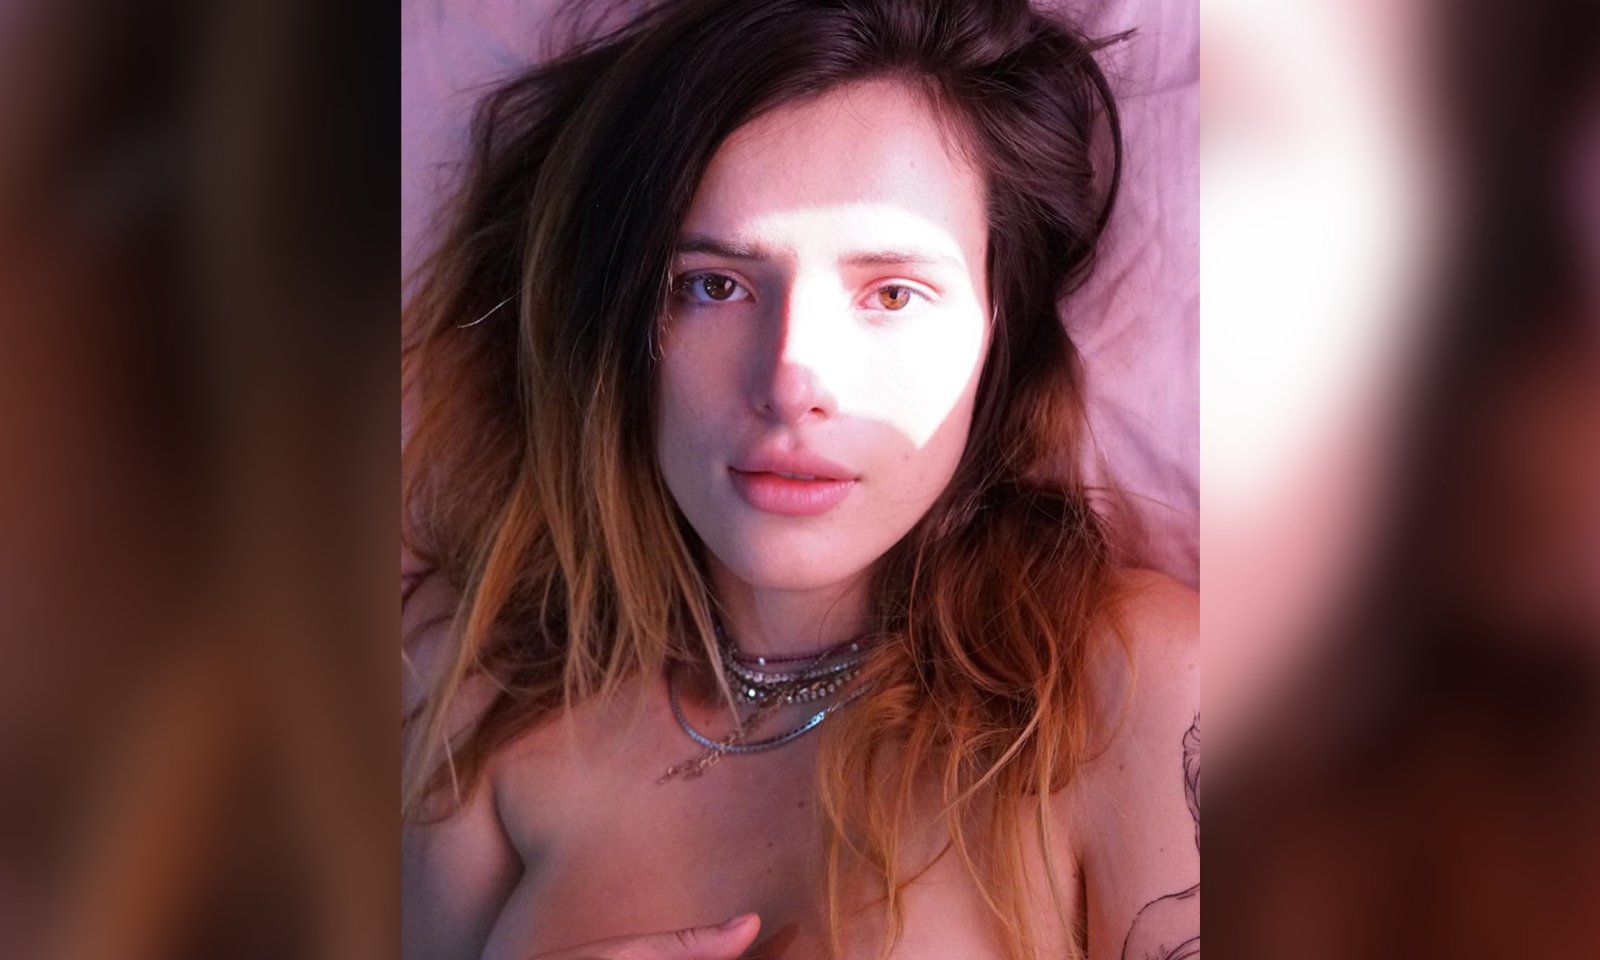 Bella thorne released nudes